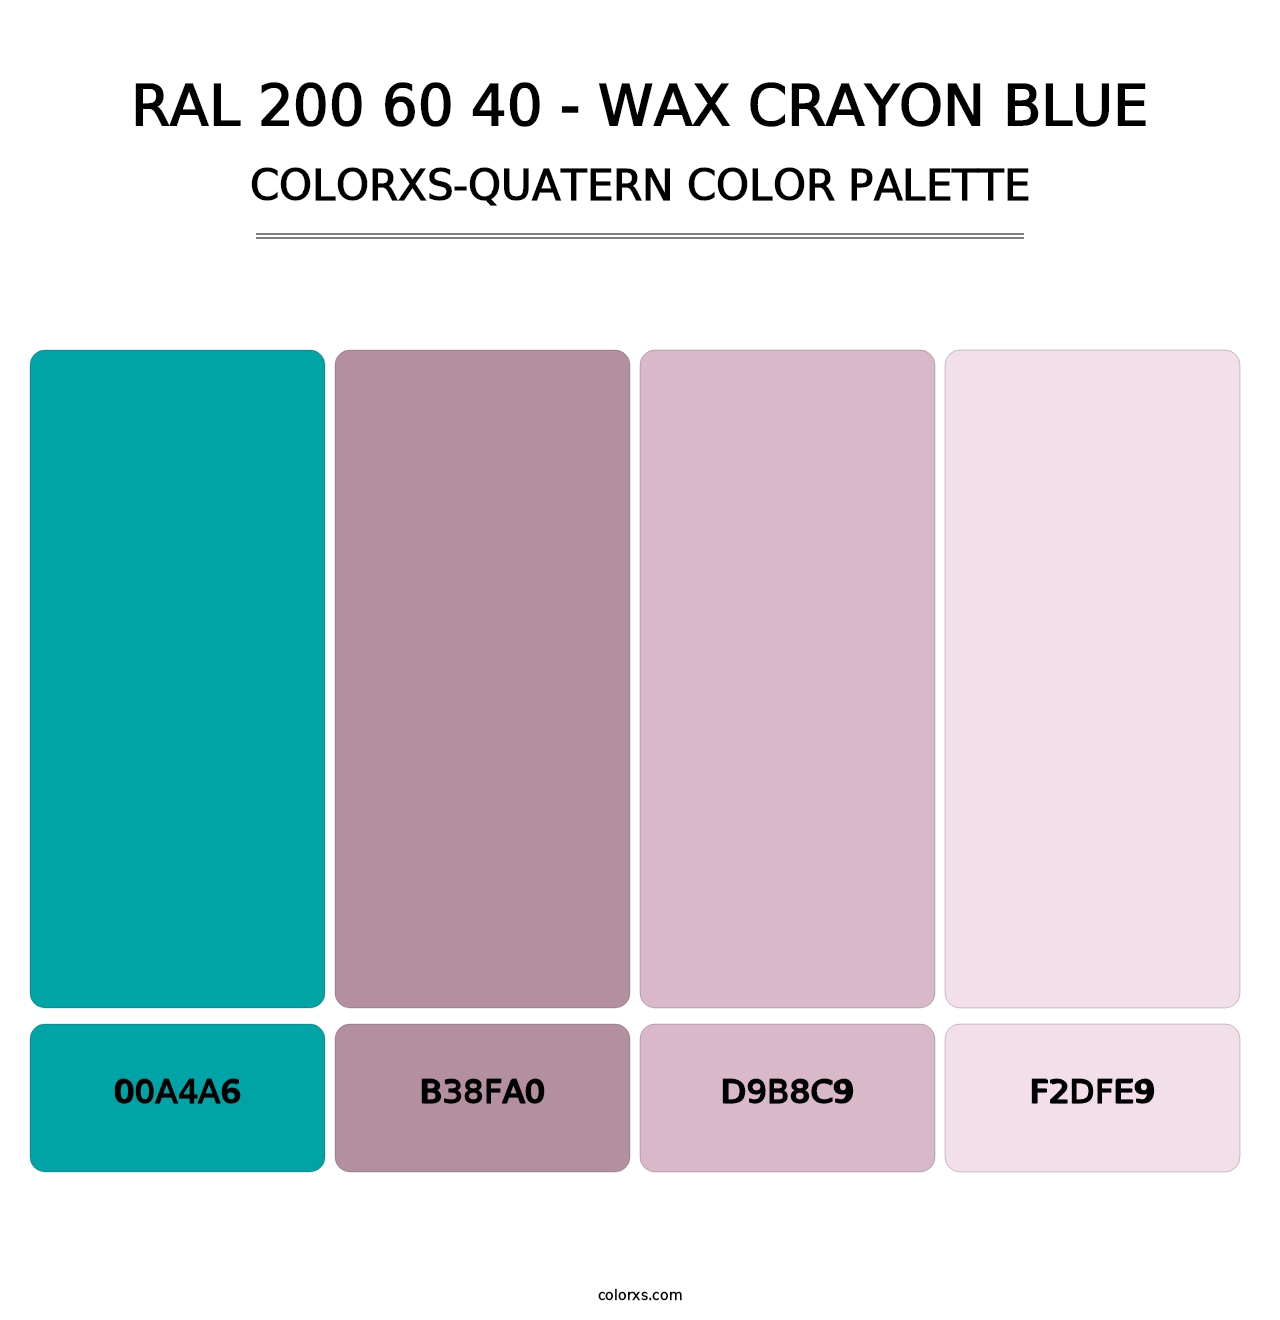 RAL 200 60 40 - Wax Crayon Blue - Colorxs Quatern Palette